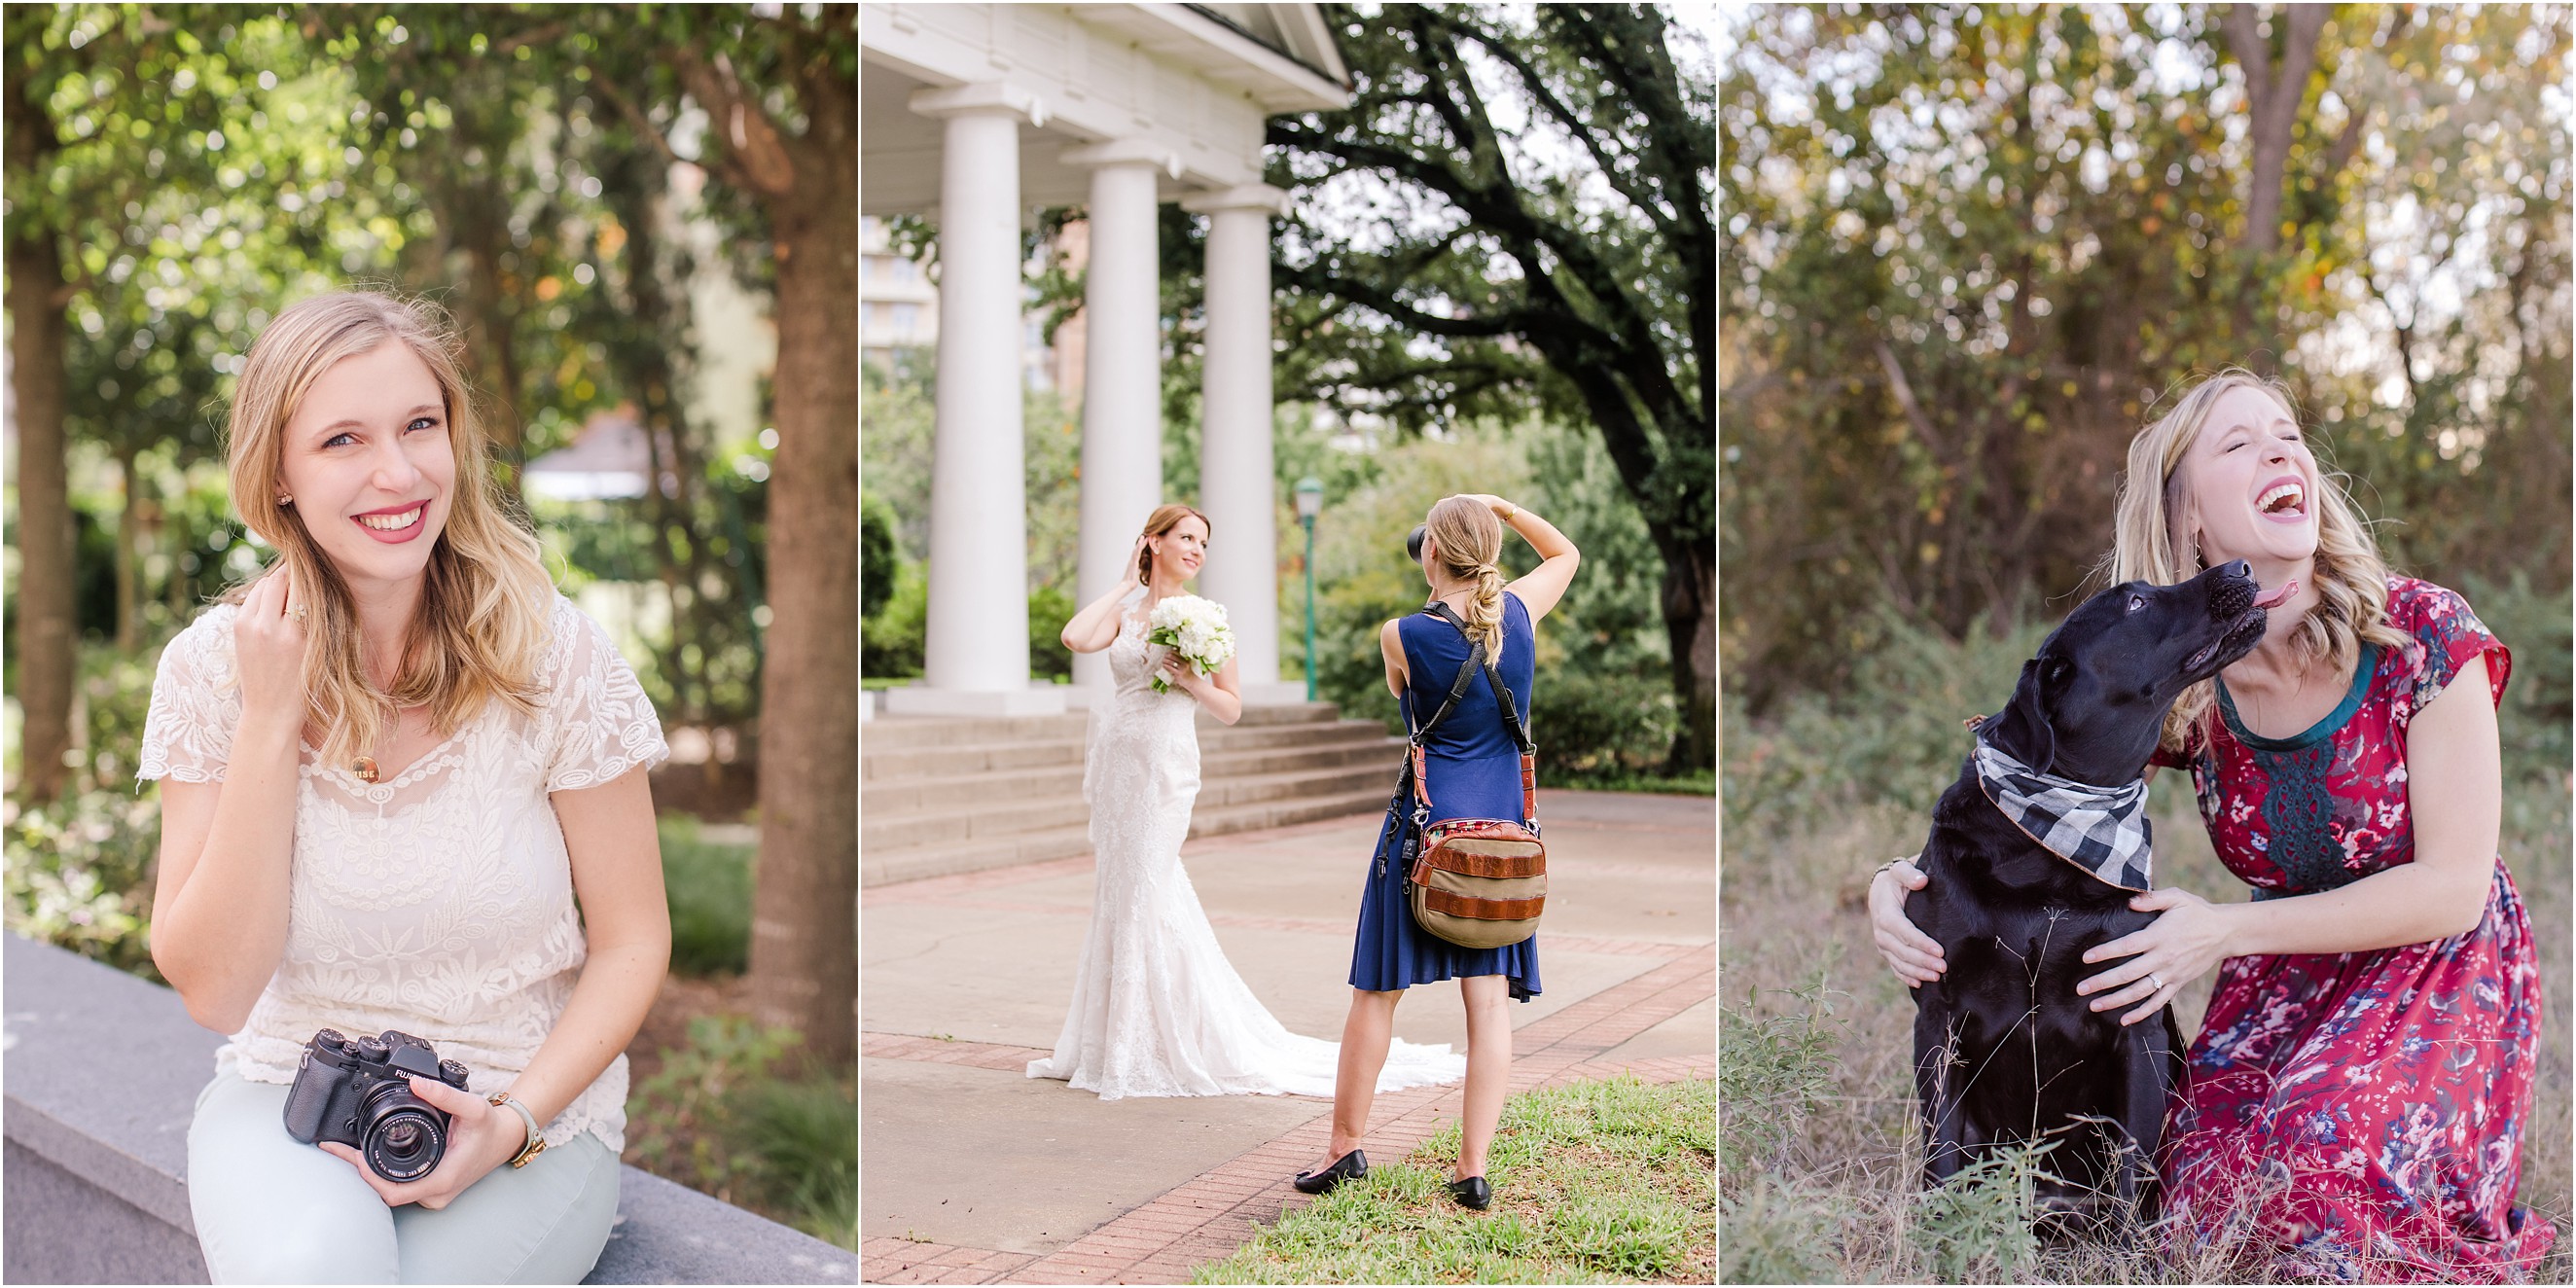 Dallas wedding photographer, MaggShots Photography